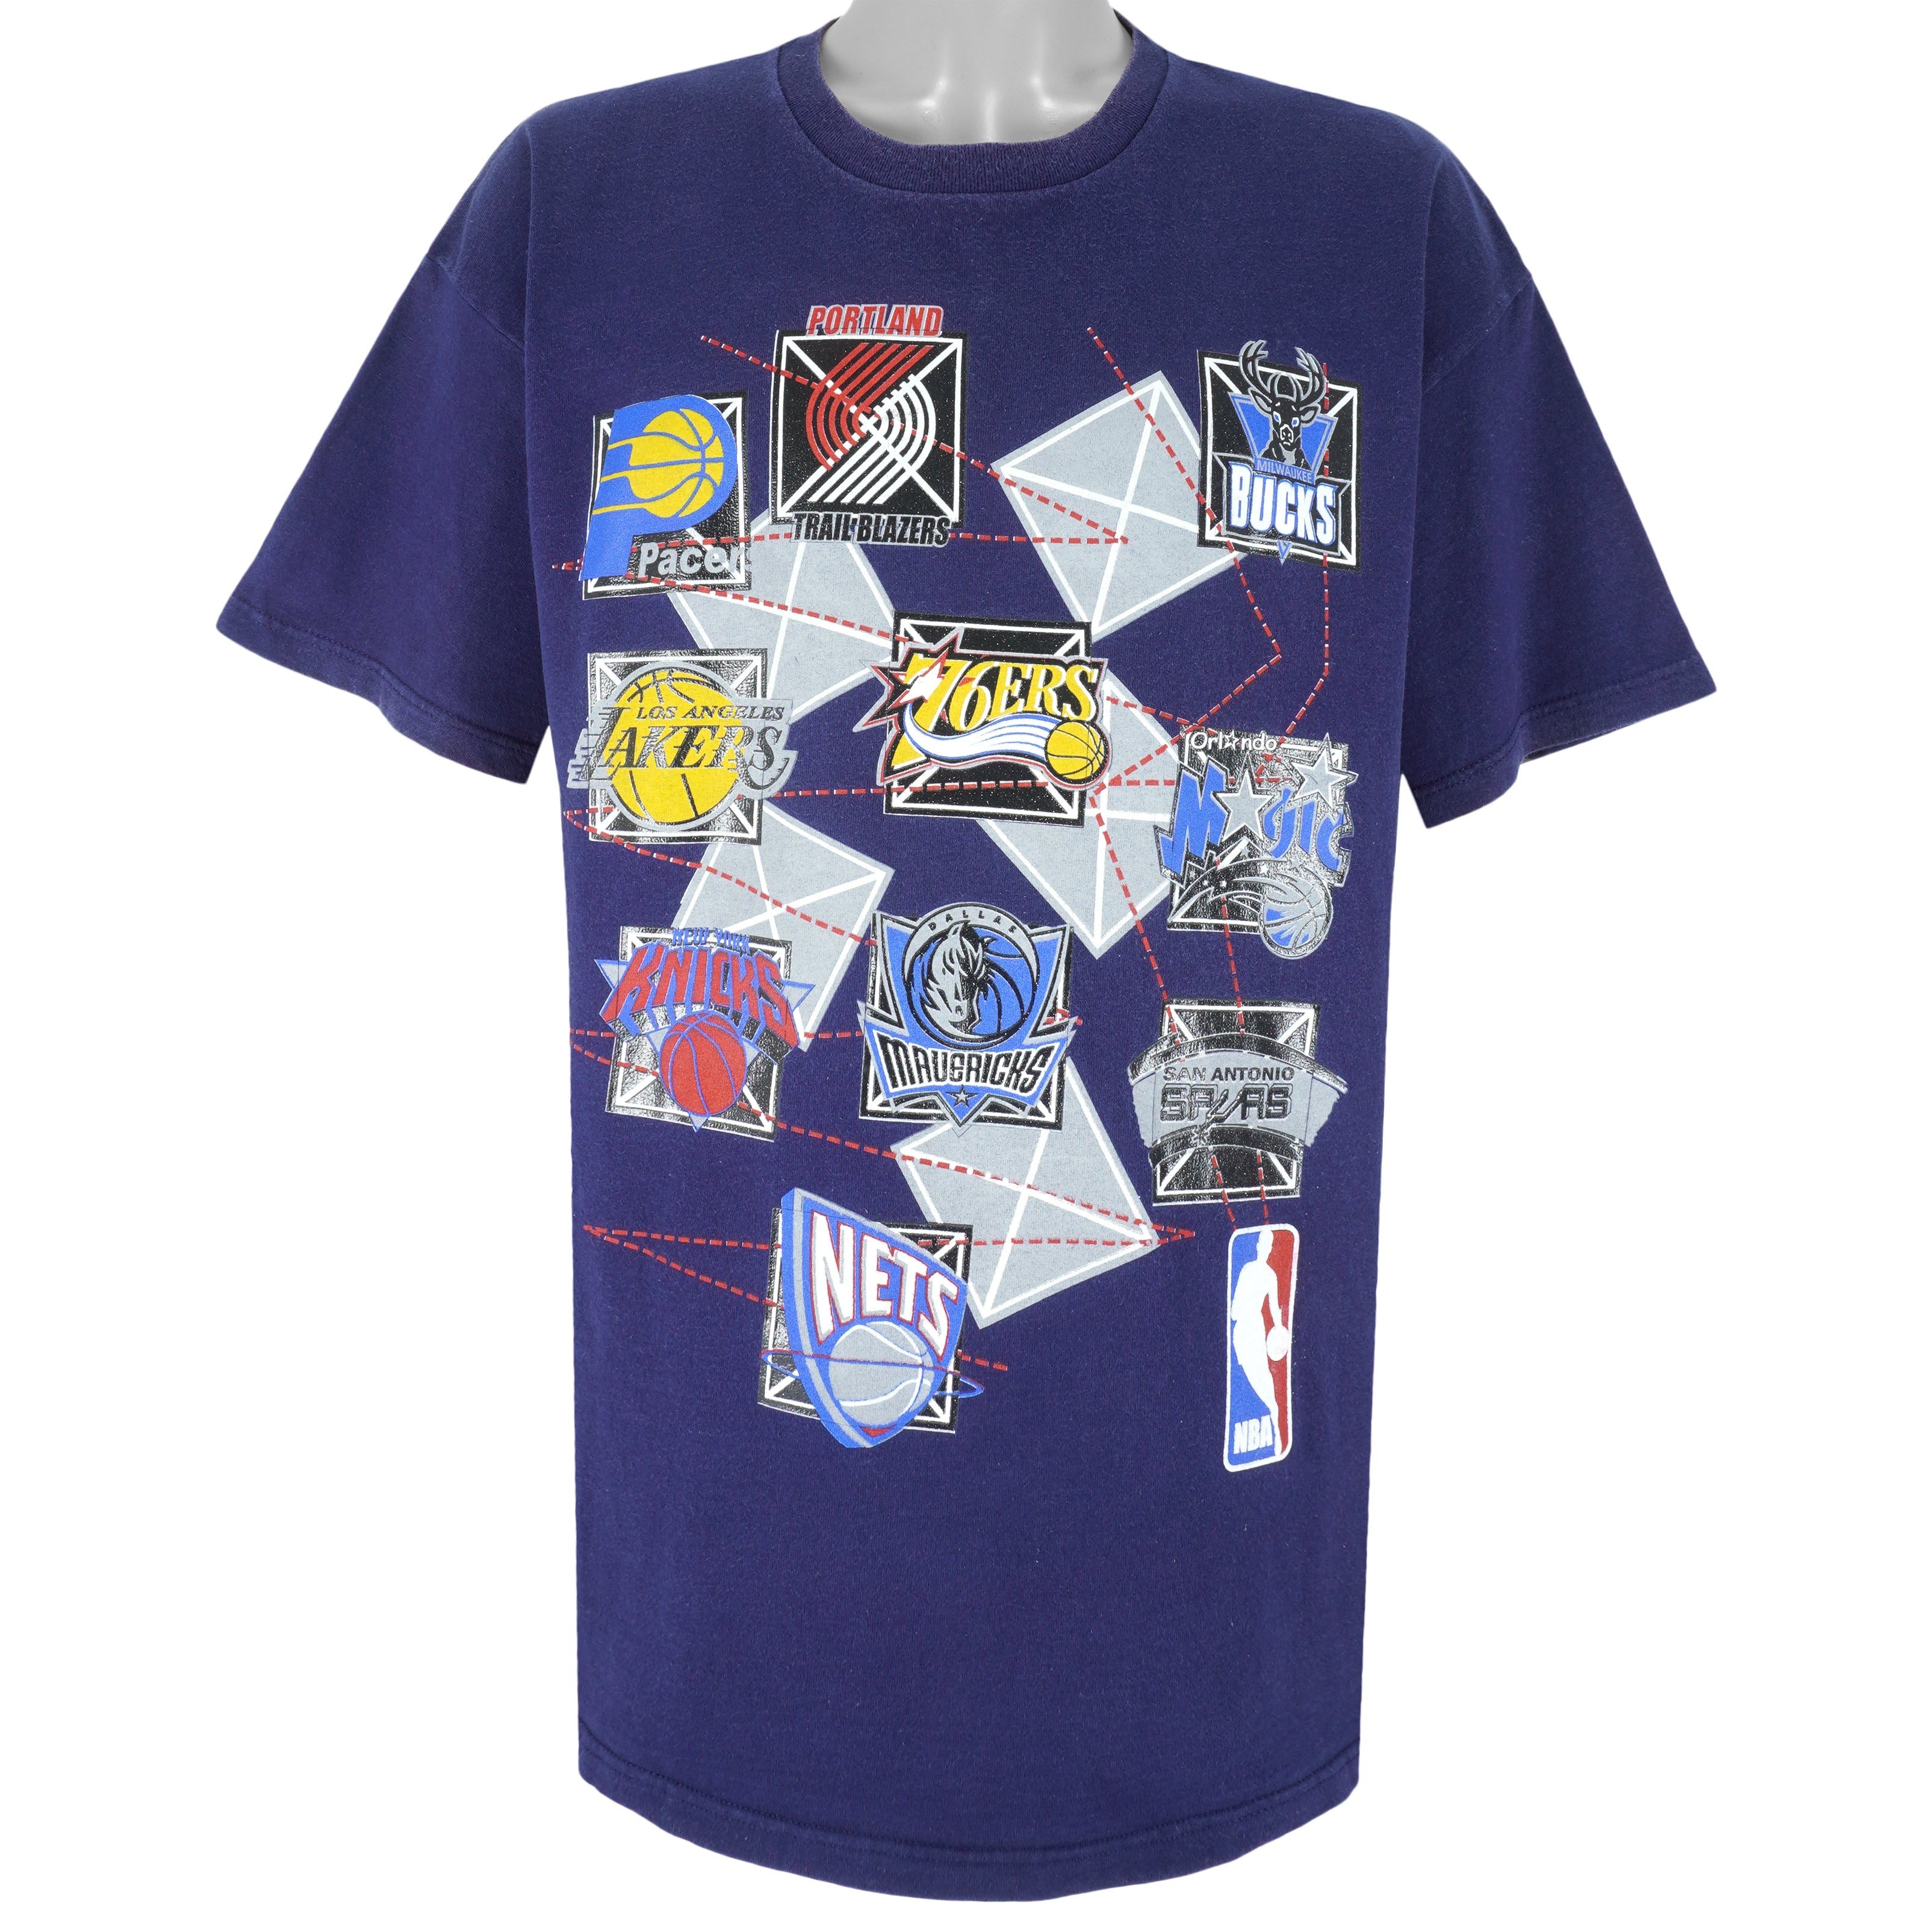 1988 Portland Trail Blazers Vintage NBA T-shirt. Tagged as a large